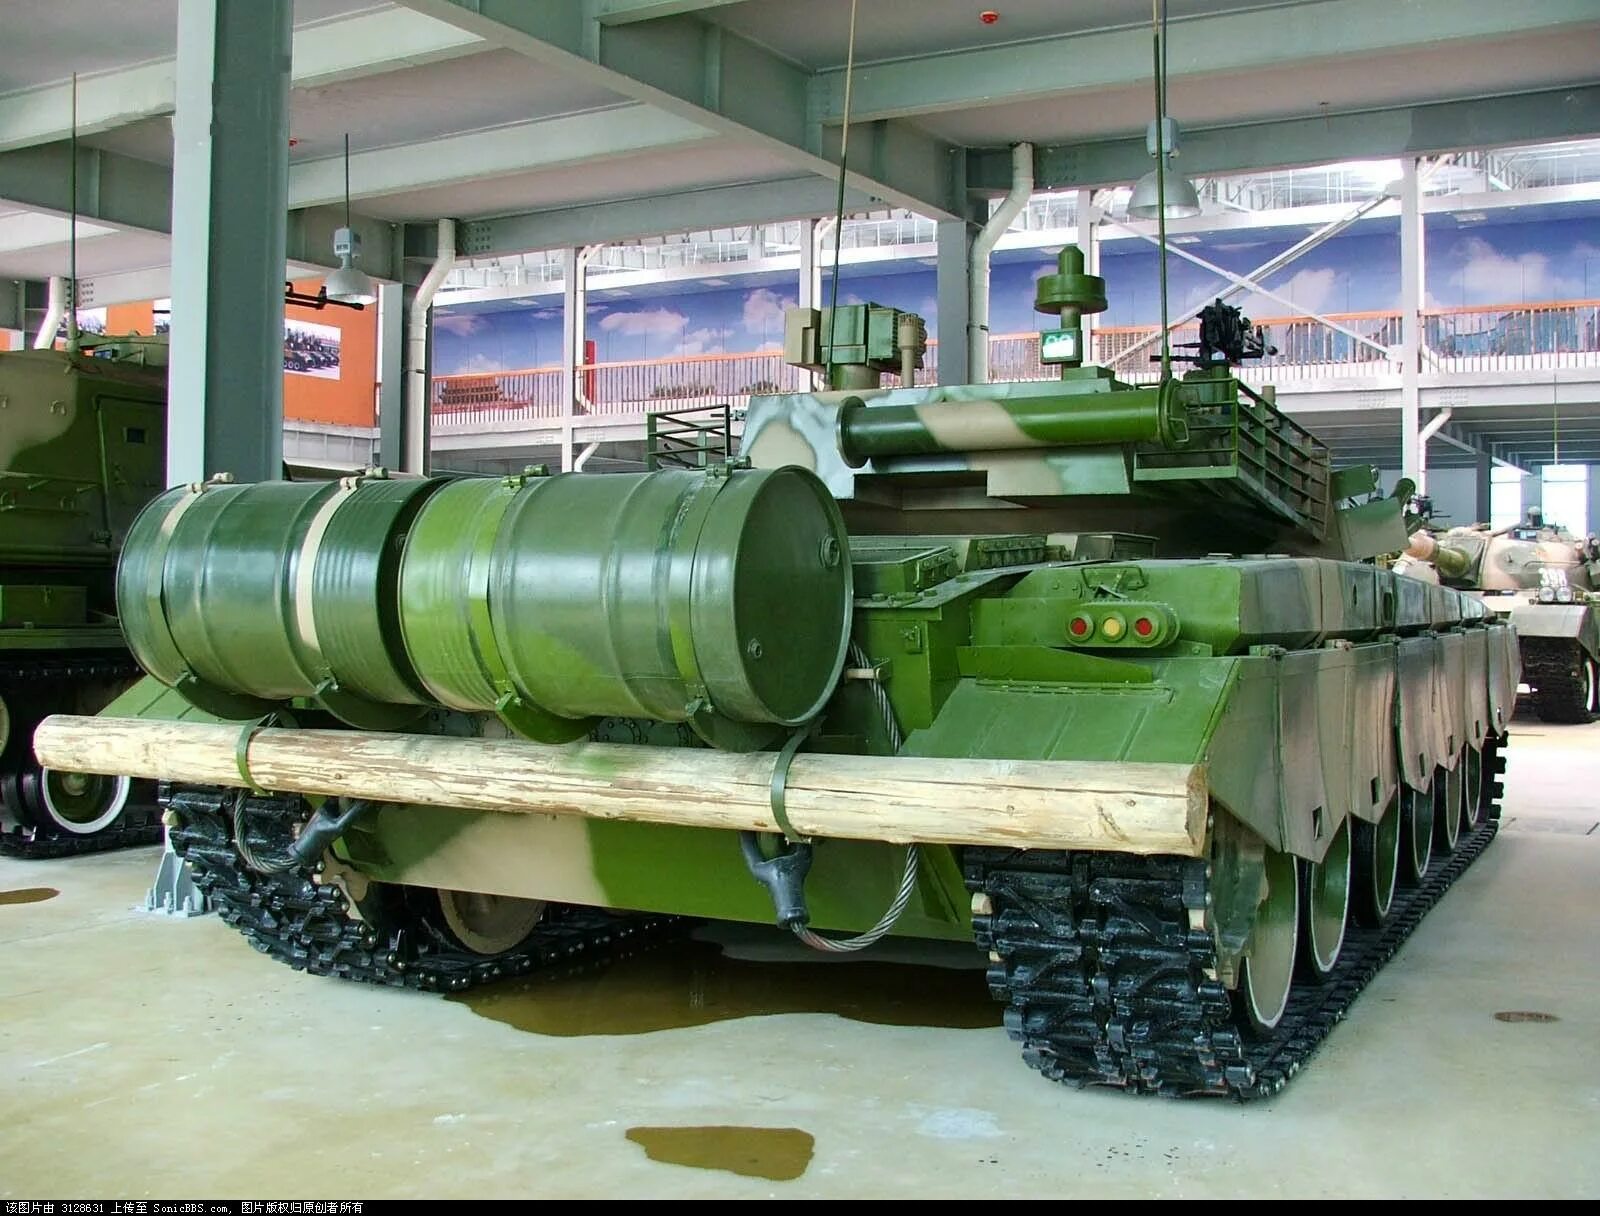 Танк ZTZ-99a. ЗТЗ 99 танк. Type 99 MBT. Китайский танк Тип 99. Танк 500 форум